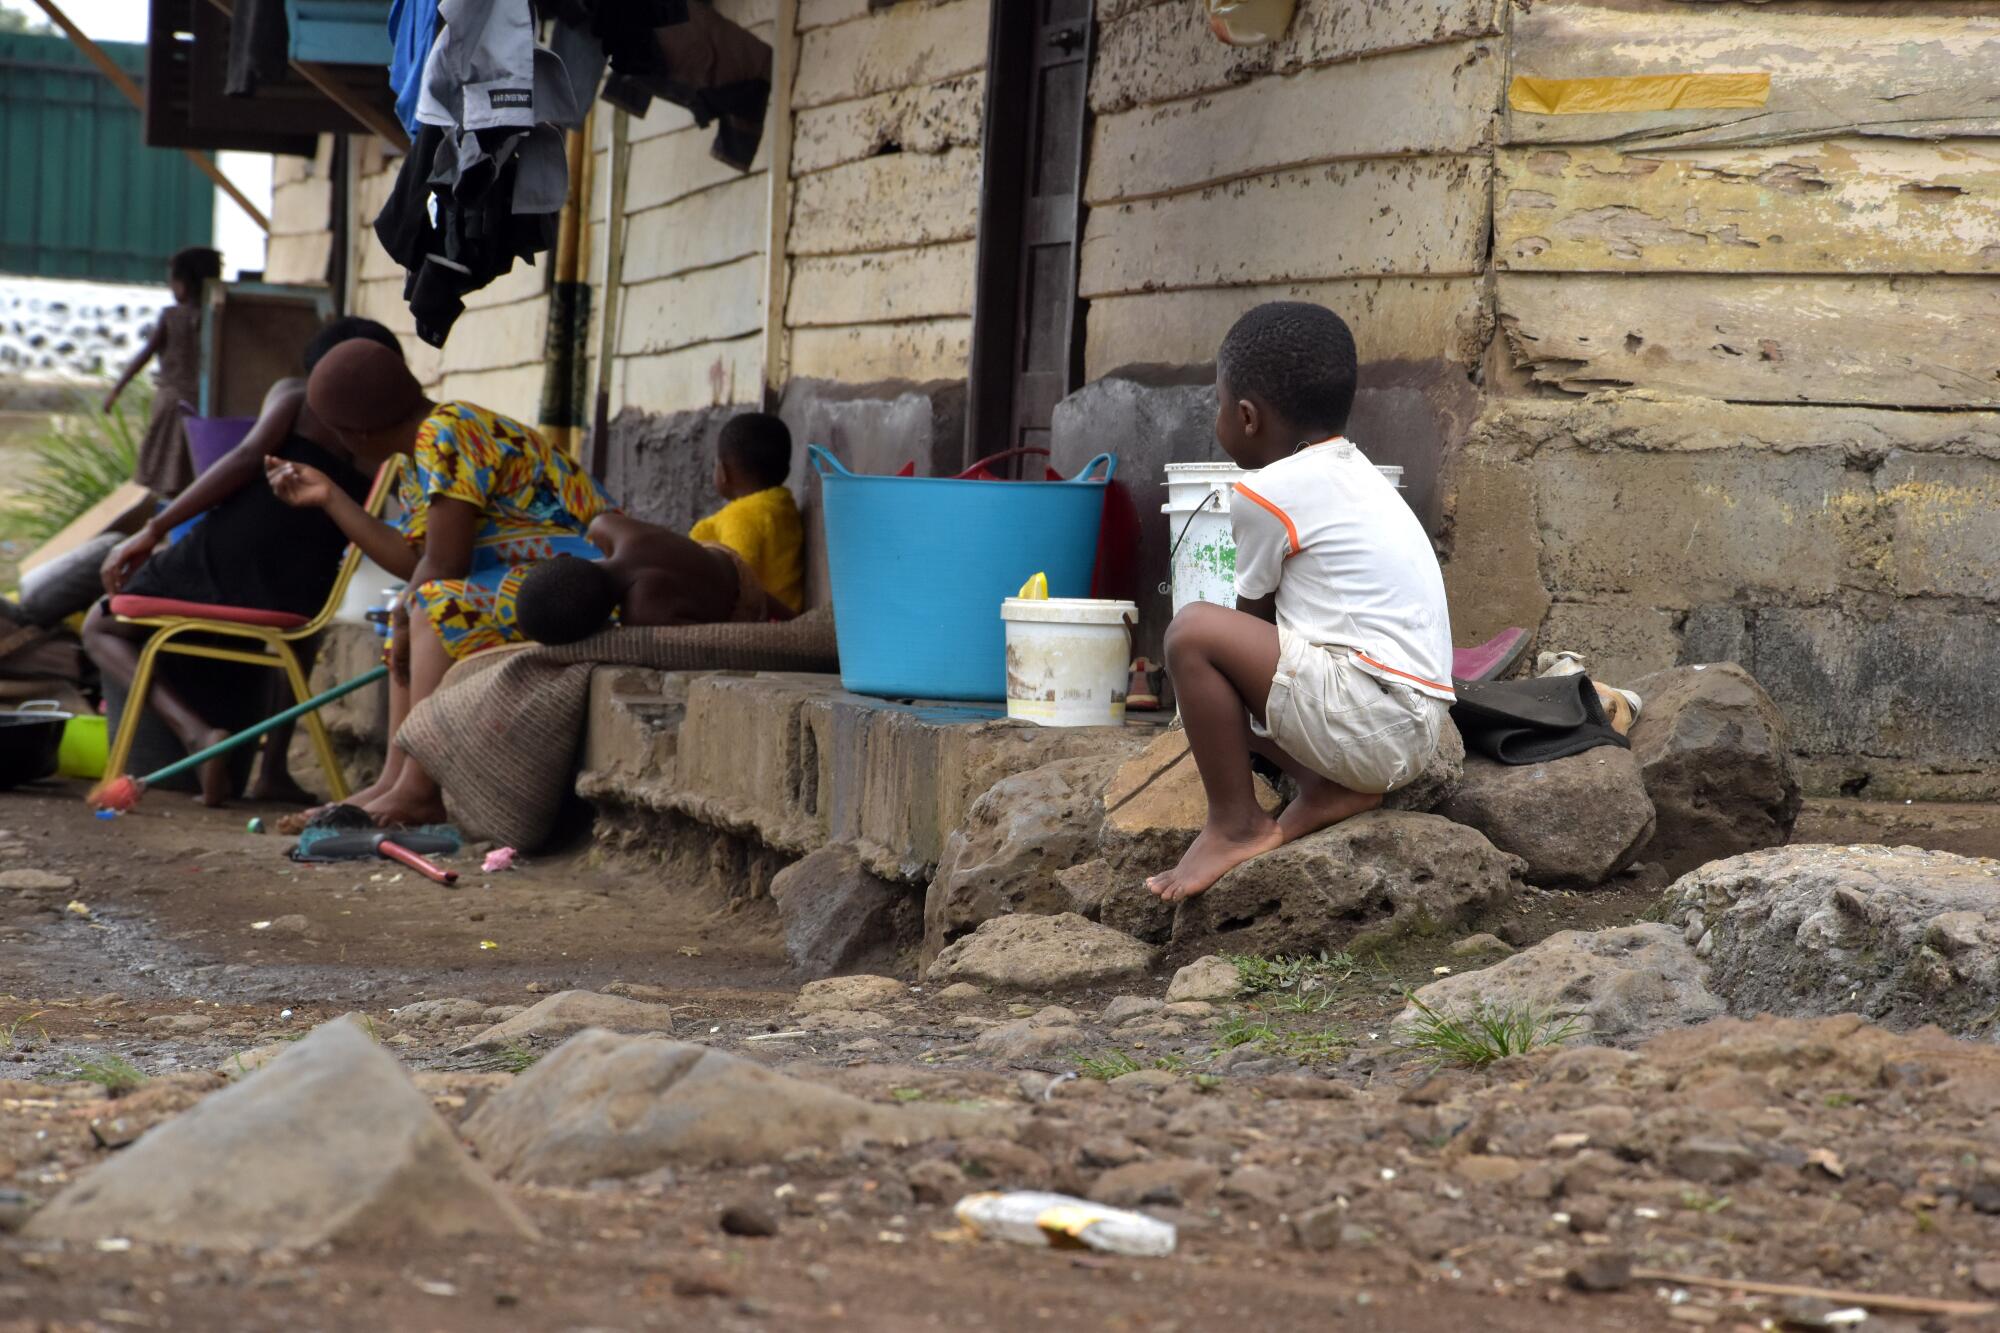 Scene of poverty in Equatorial Guinea 